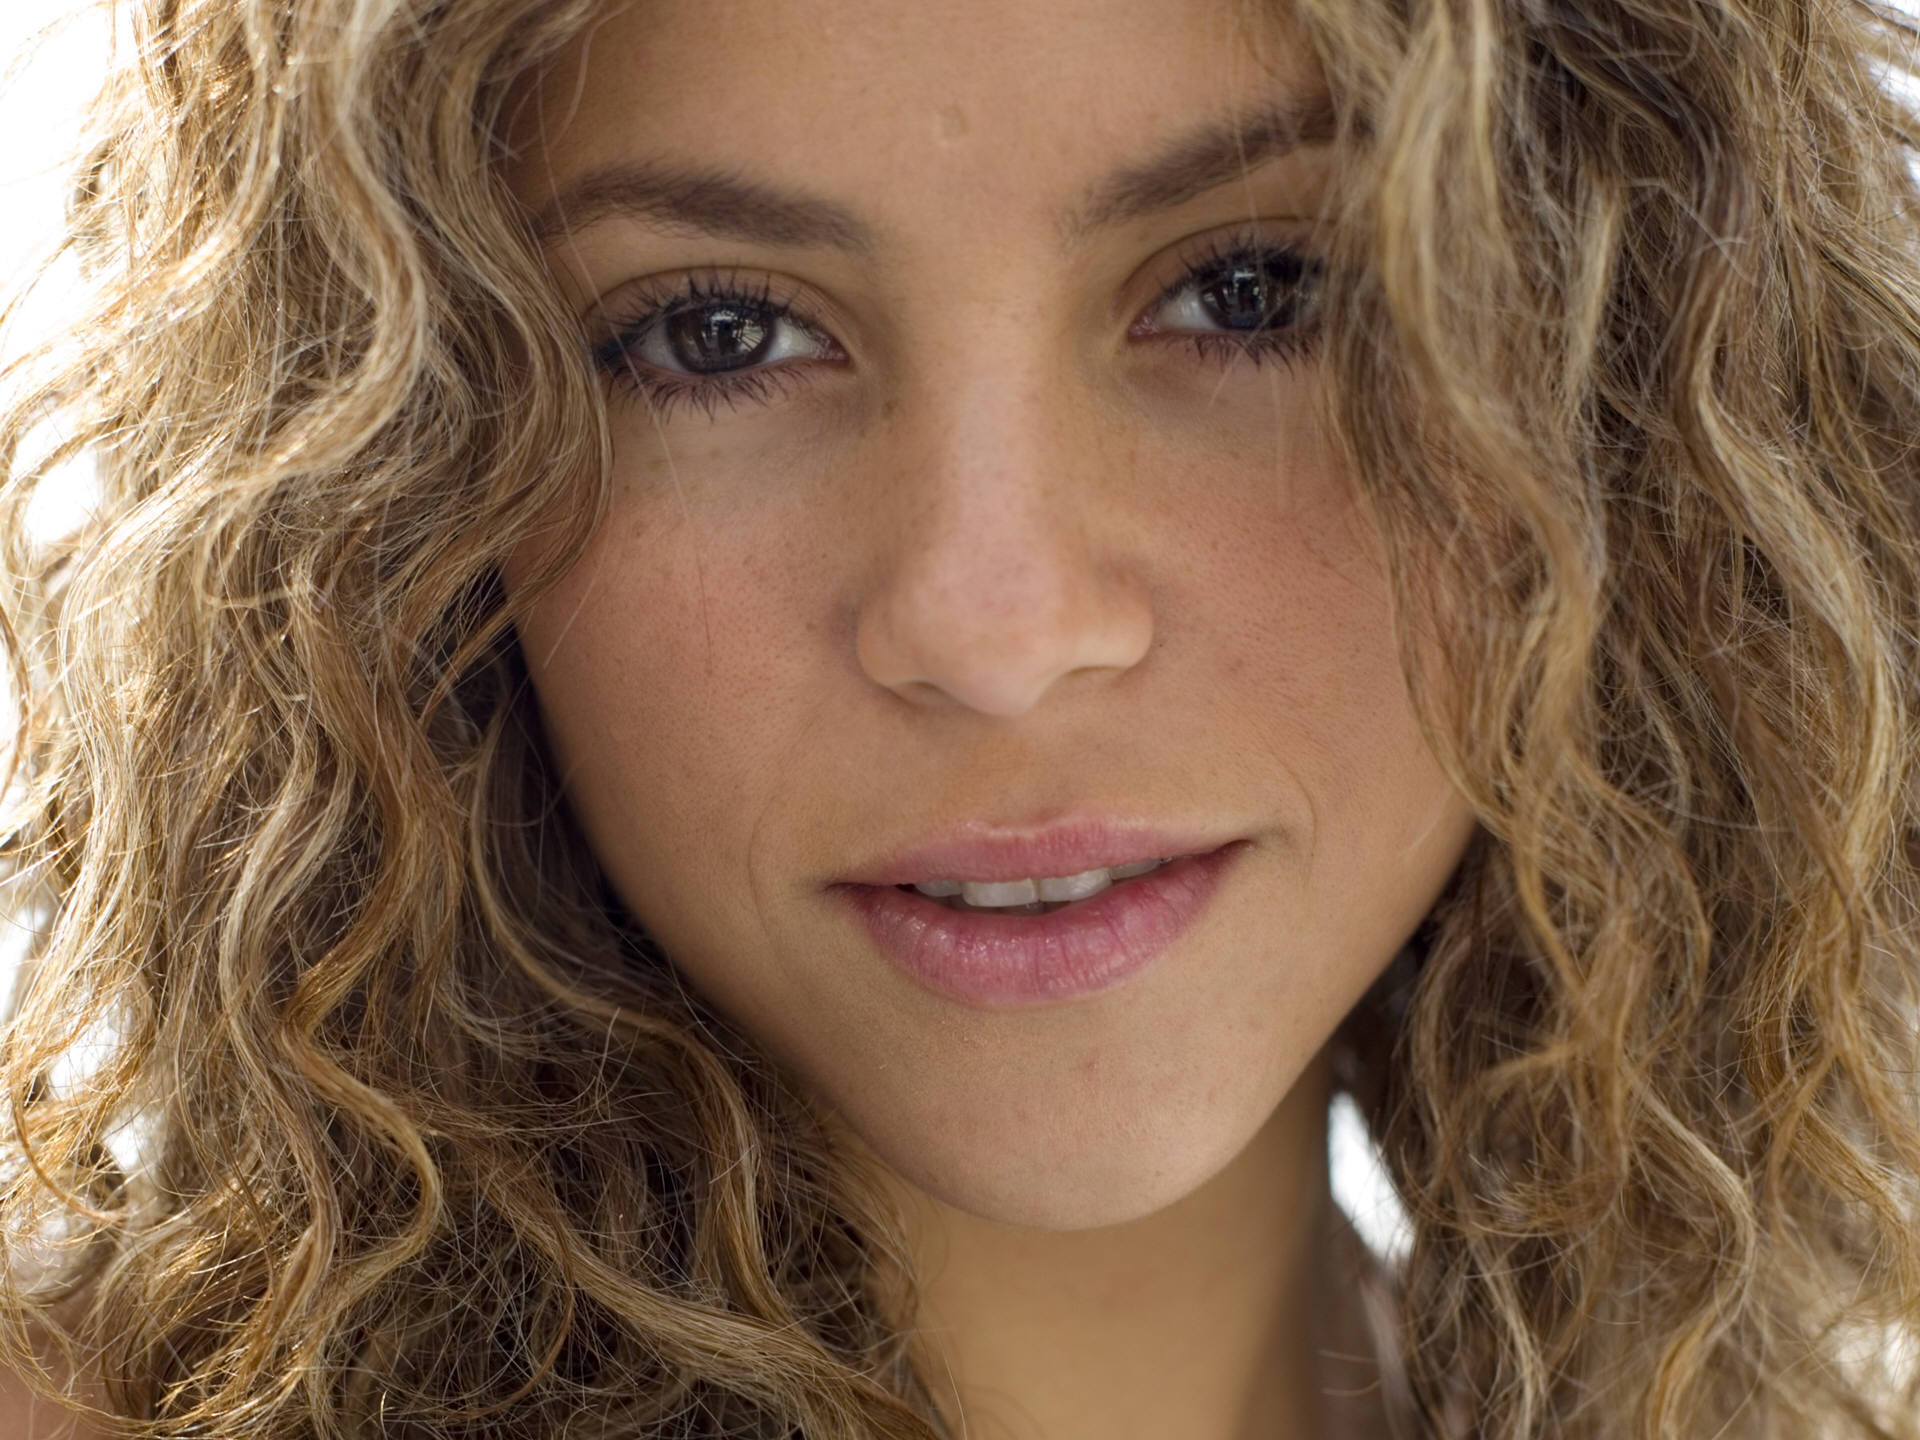 Shakira Mebarak Ripoll(ֽ26)